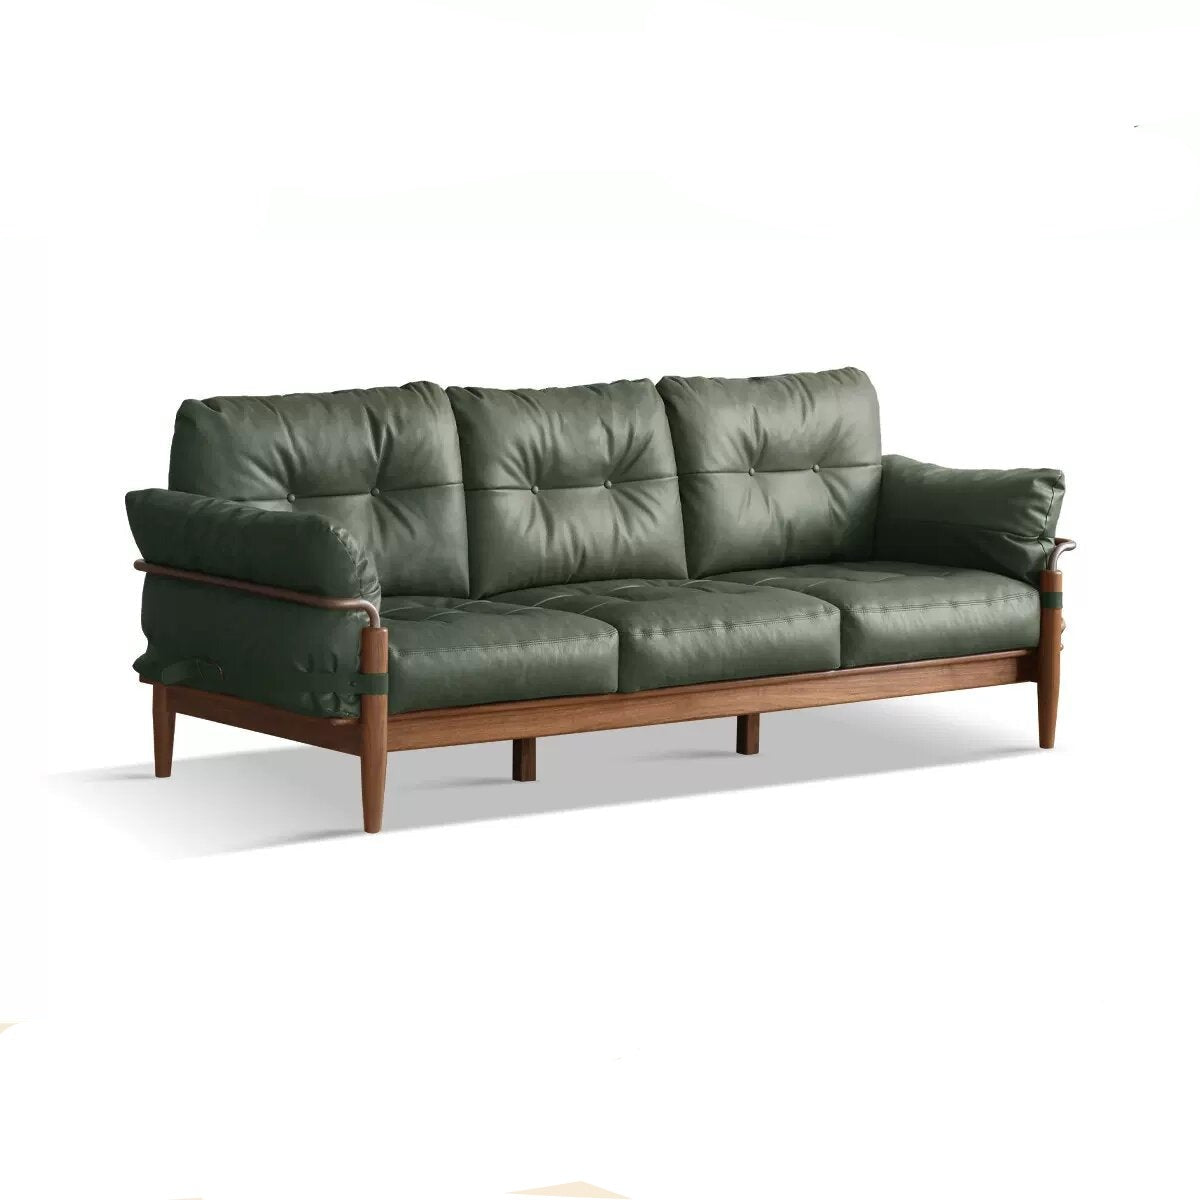 Black walnut solid wood Leather sofa"